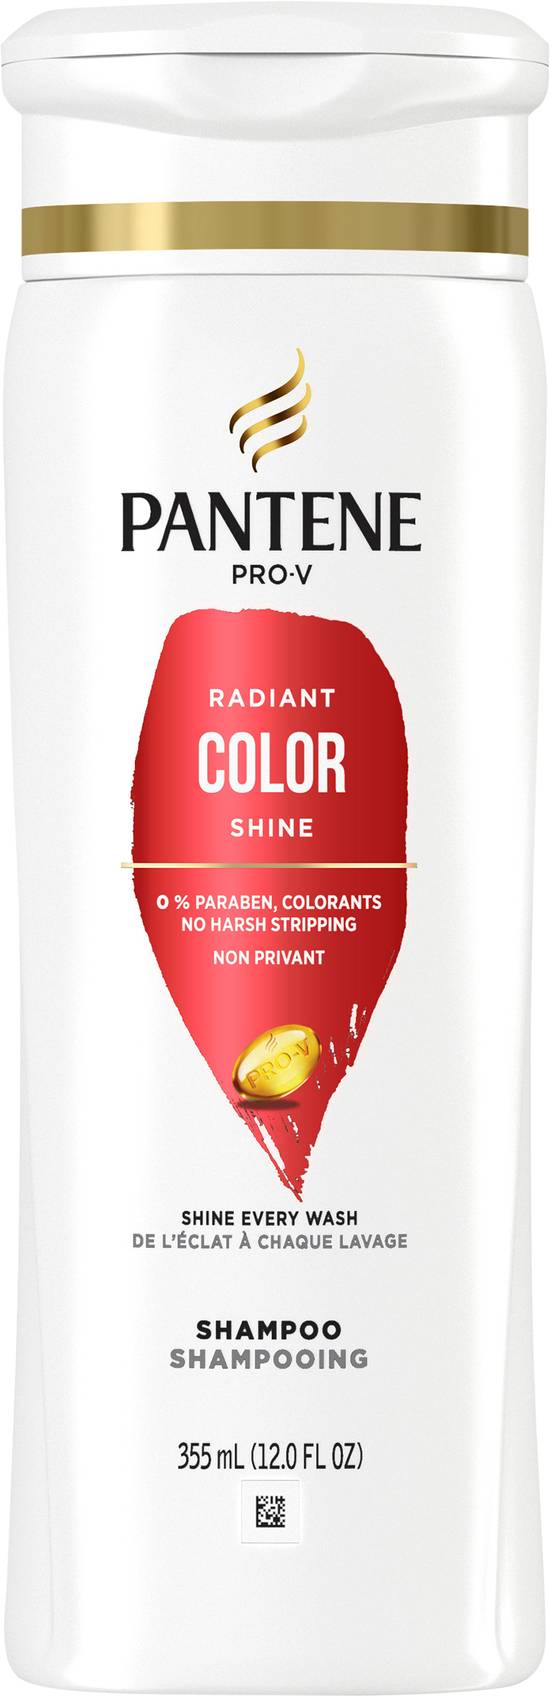 Pantene Pro-V Radiant Color Shine Shampoo